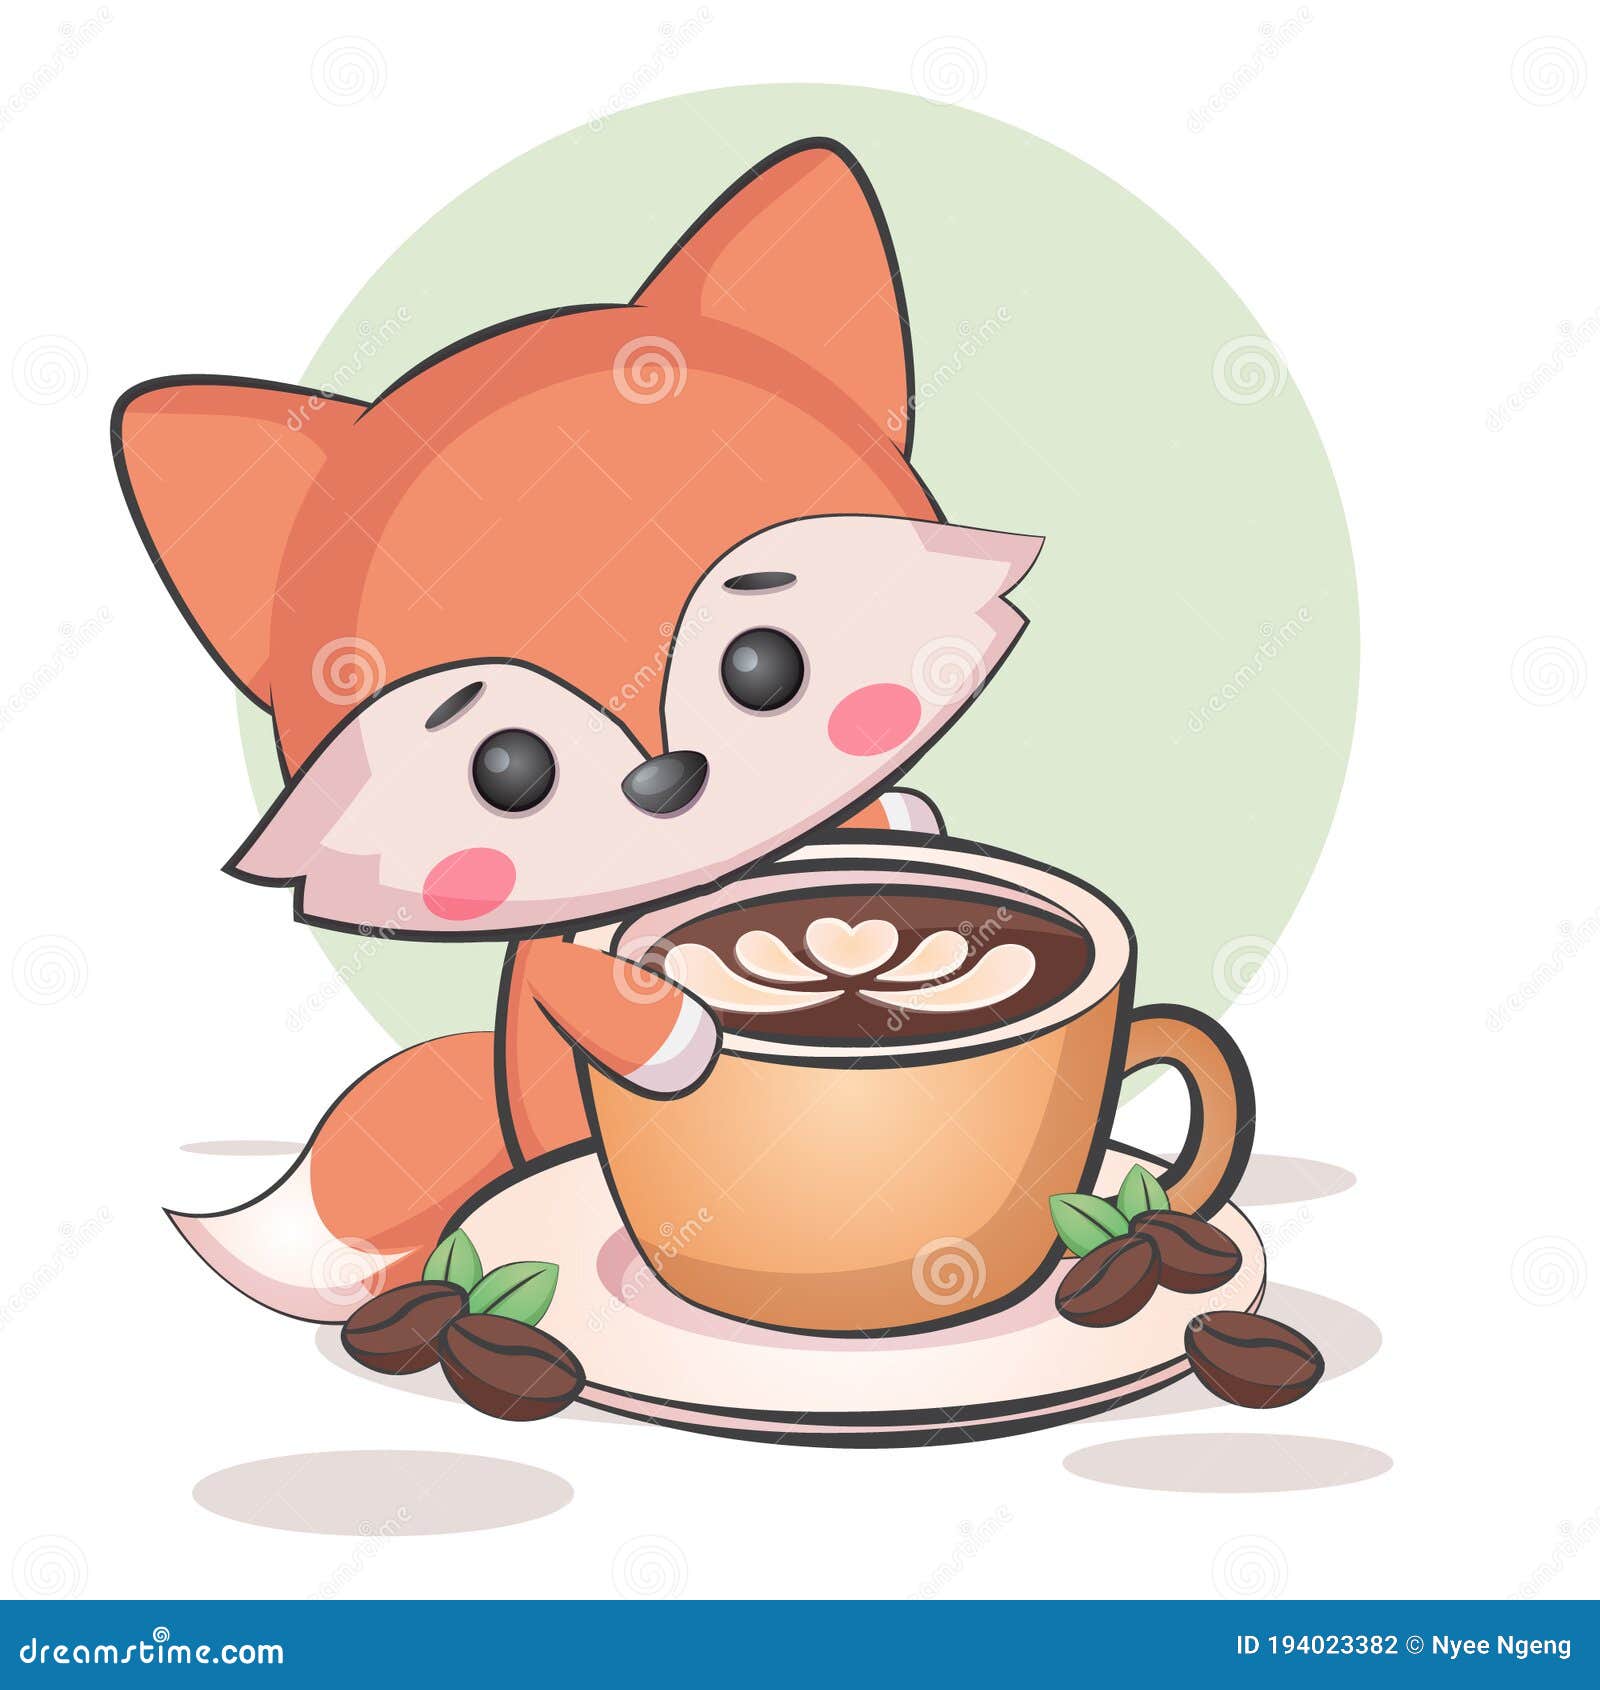 coffee cup and art  Kawaii drawings, Cute easy drawings, Easy drawings